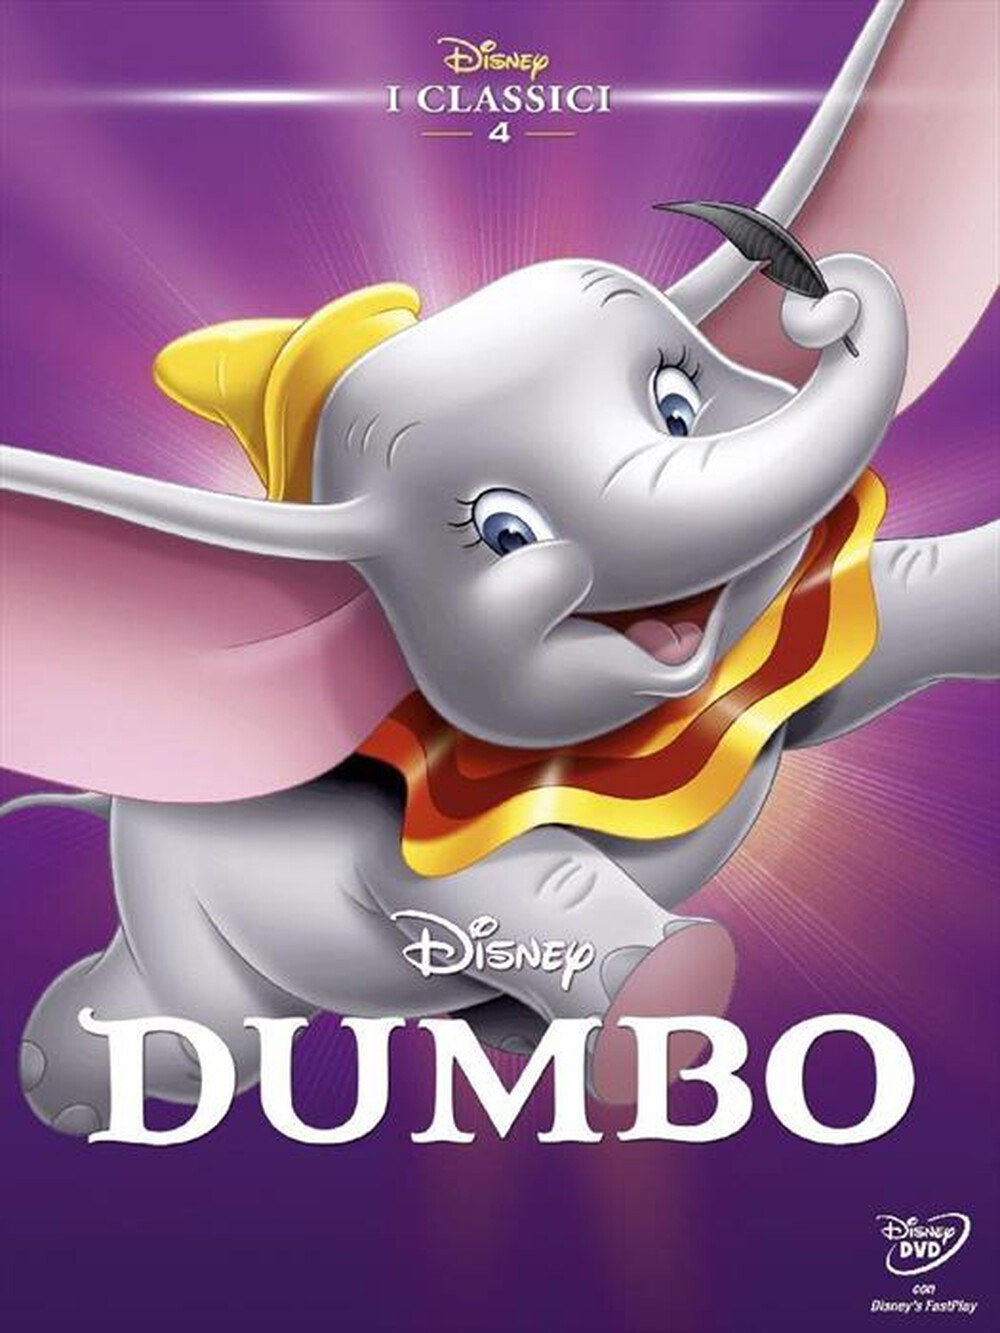 "WALT DISNEY - Dumbo"